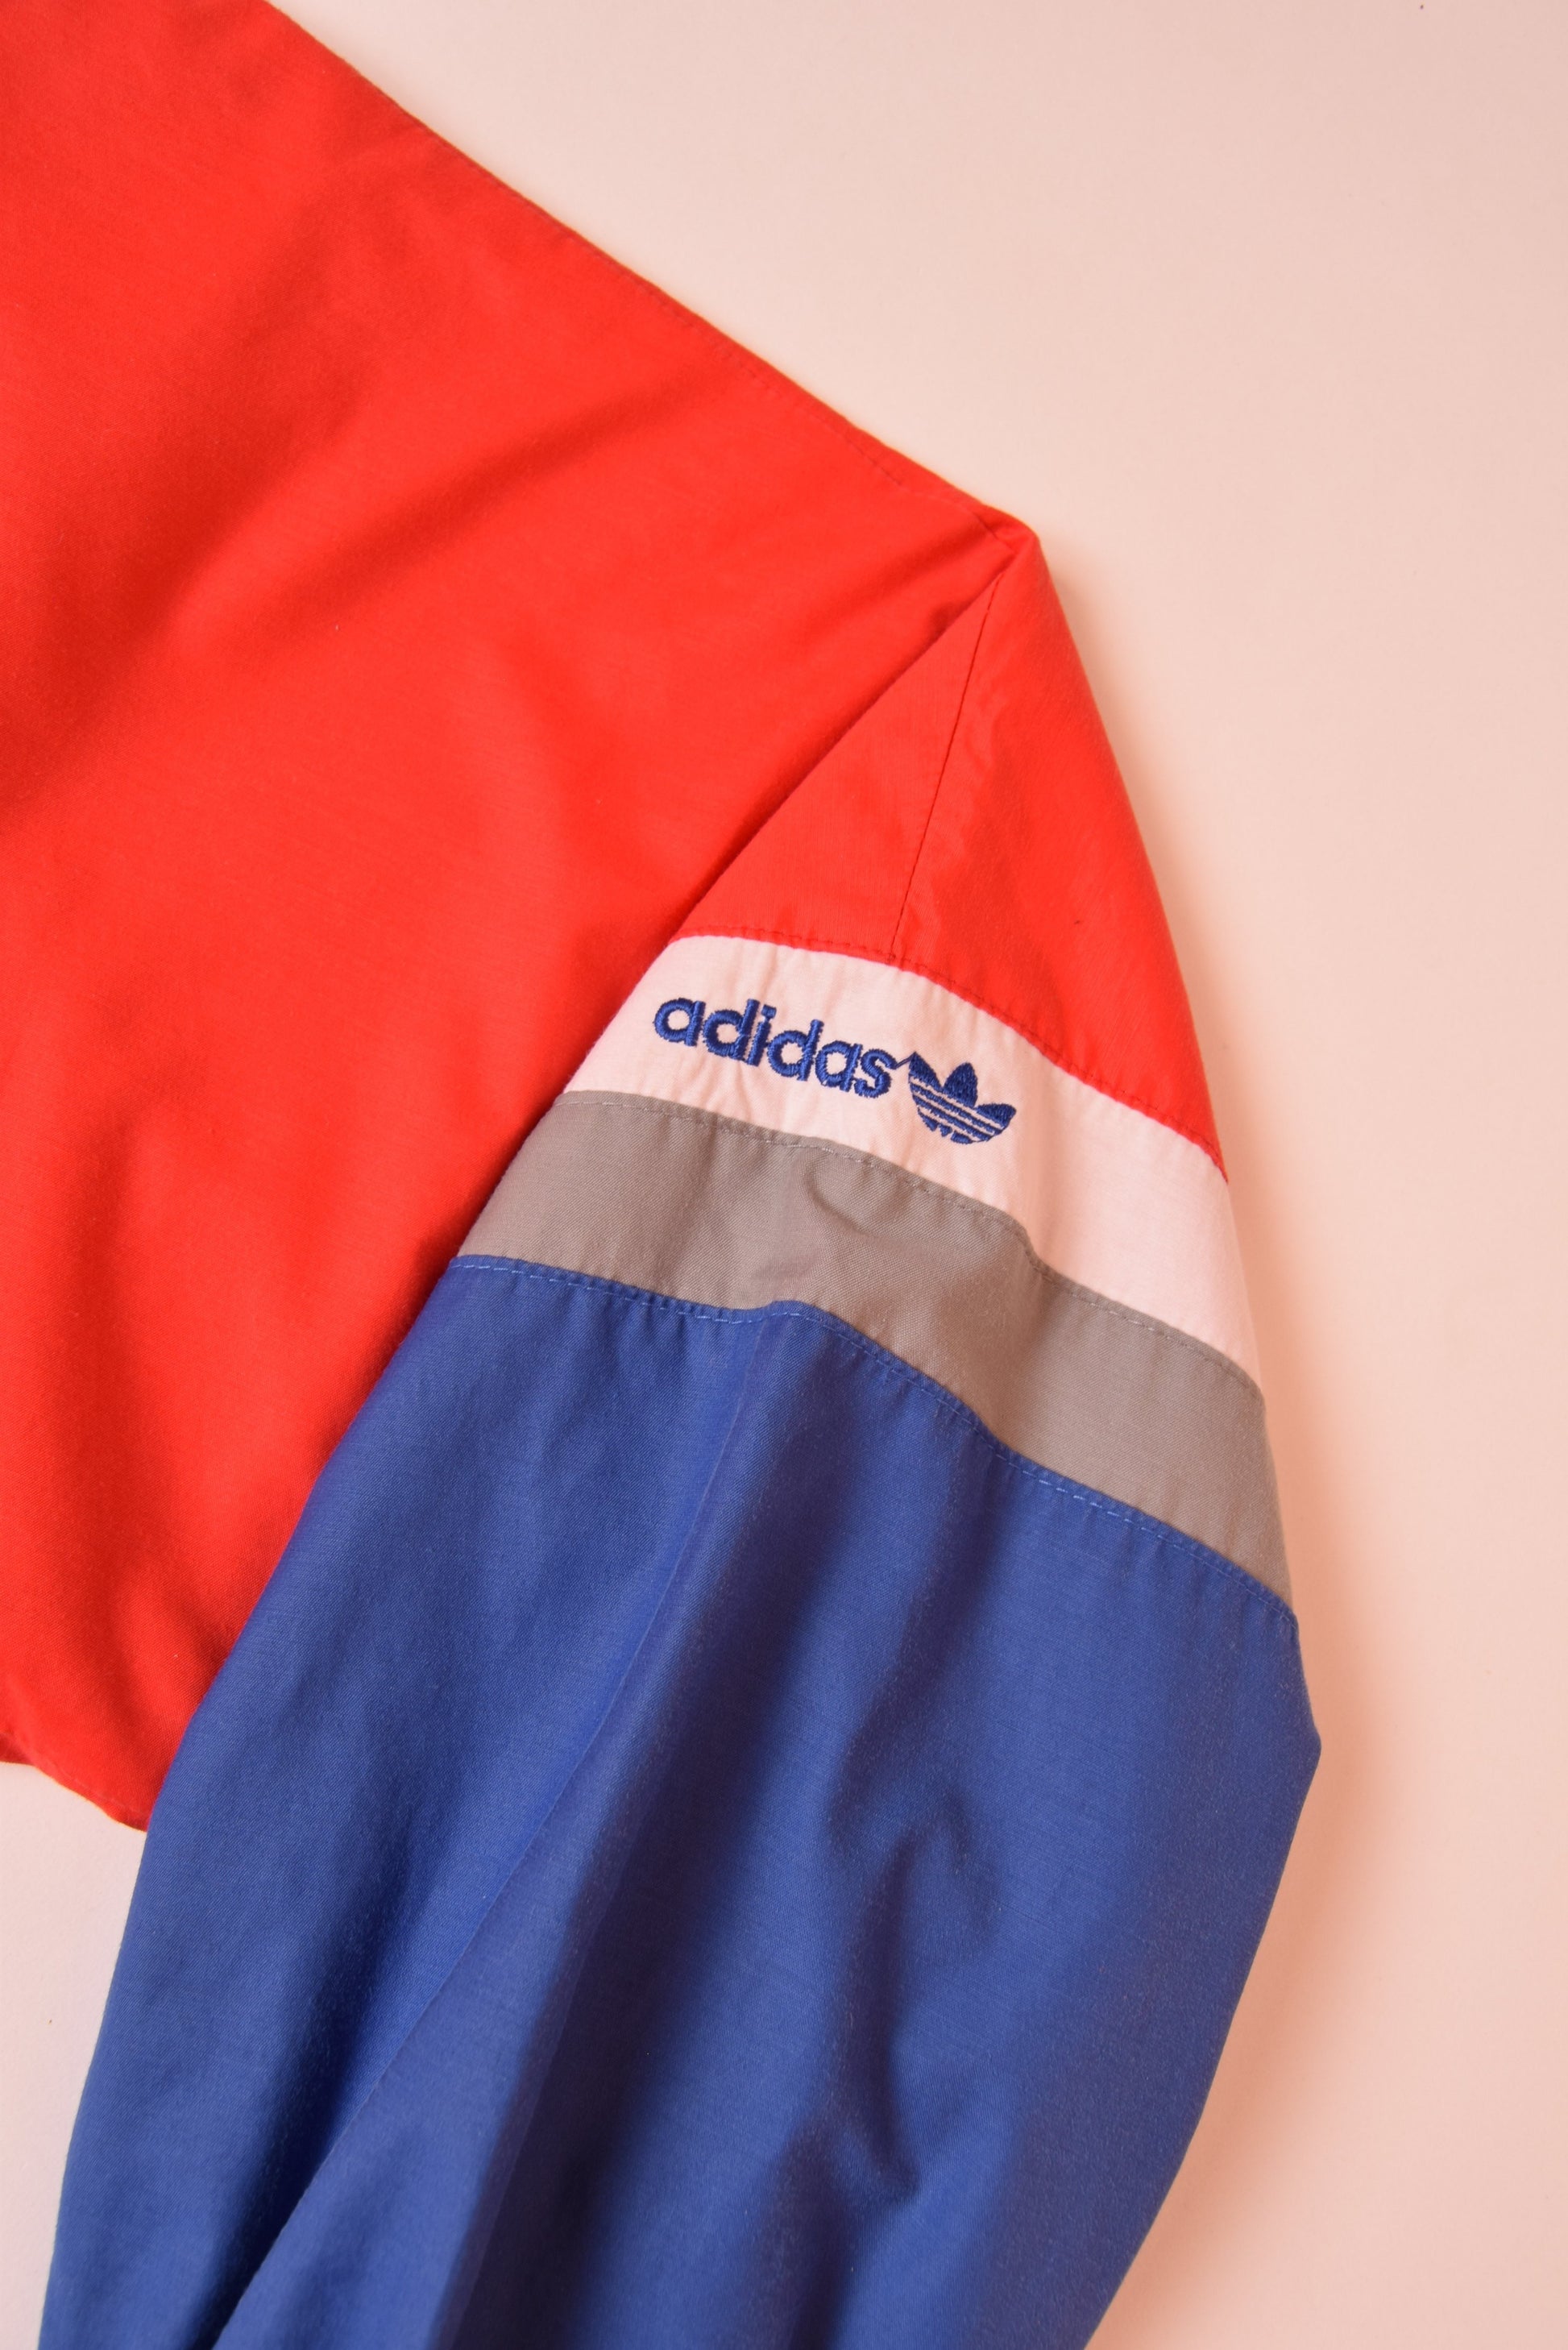 Vintage Adidas 80's Jacket Made in West Germany Size XL - XXL